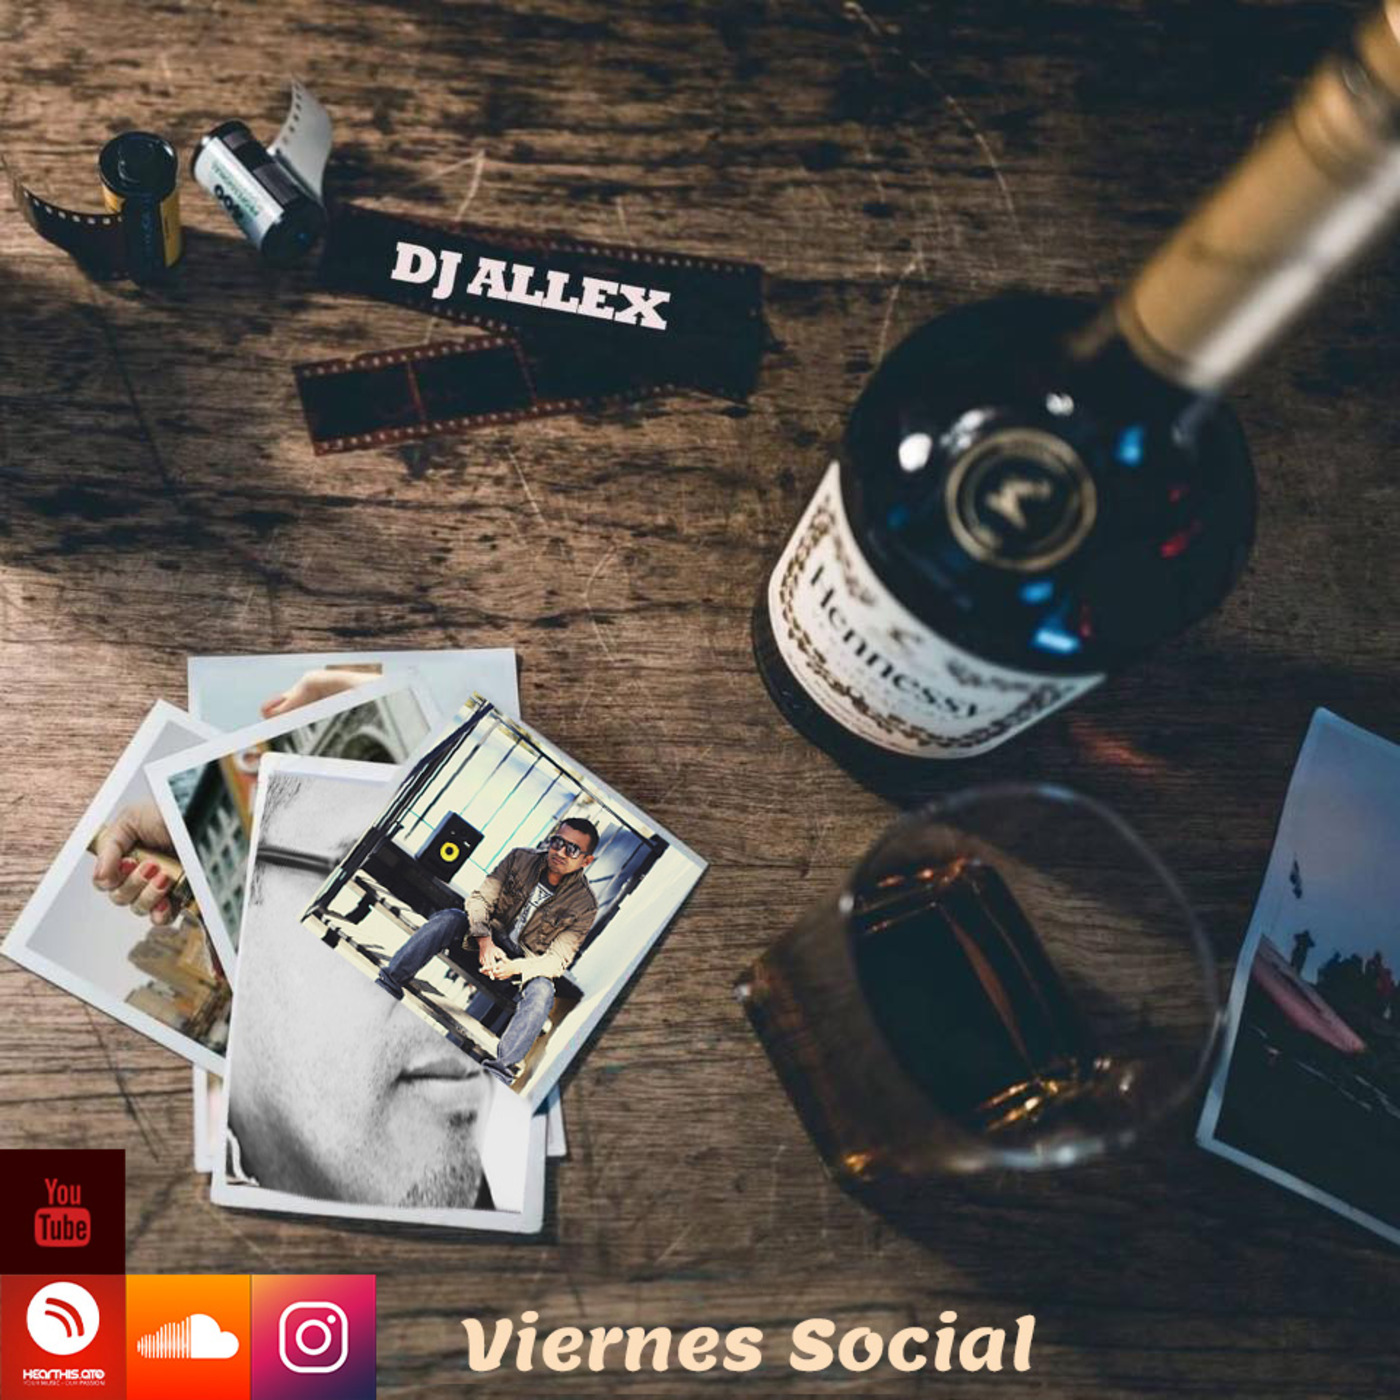 DJ Allex Presents - Viernes Social (Fiesta Edition)